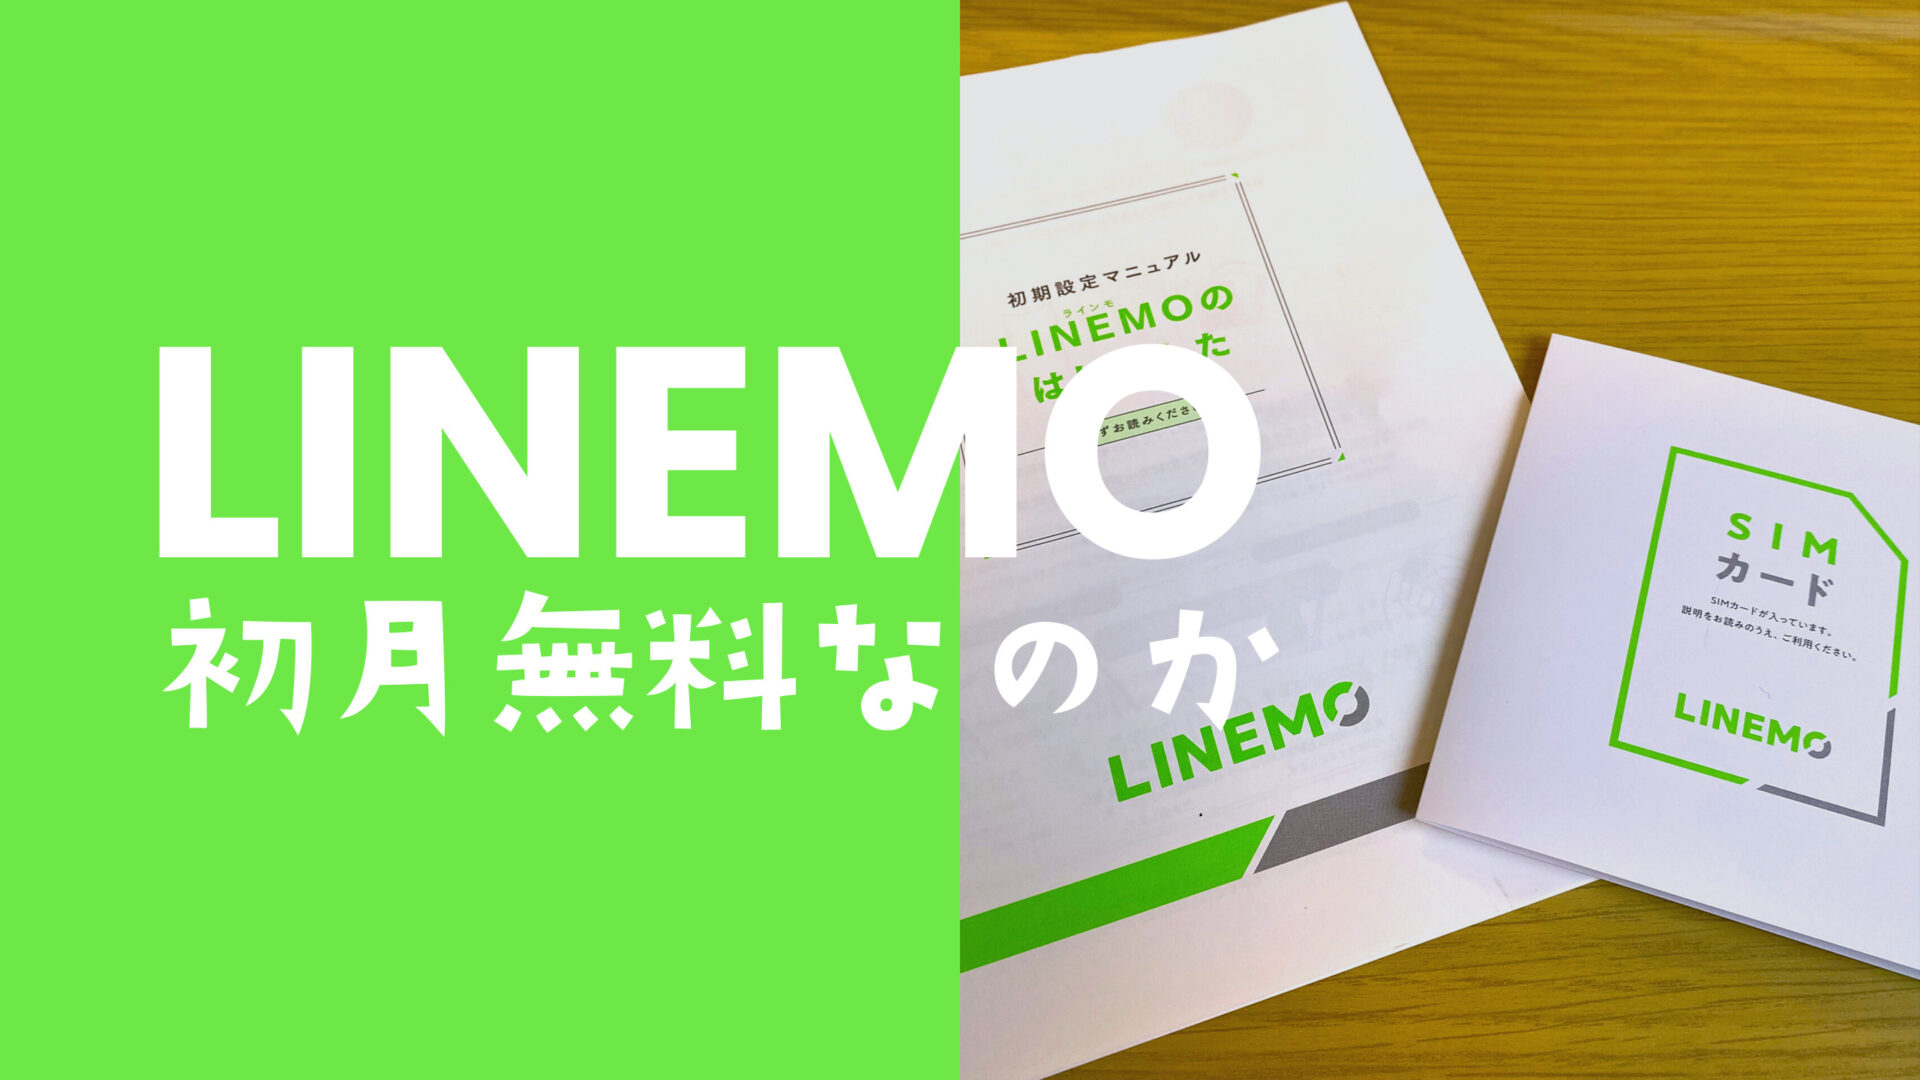 LINEMO(ラインモ)は初月の料金が無料になるのか解説。のサムネイル画像